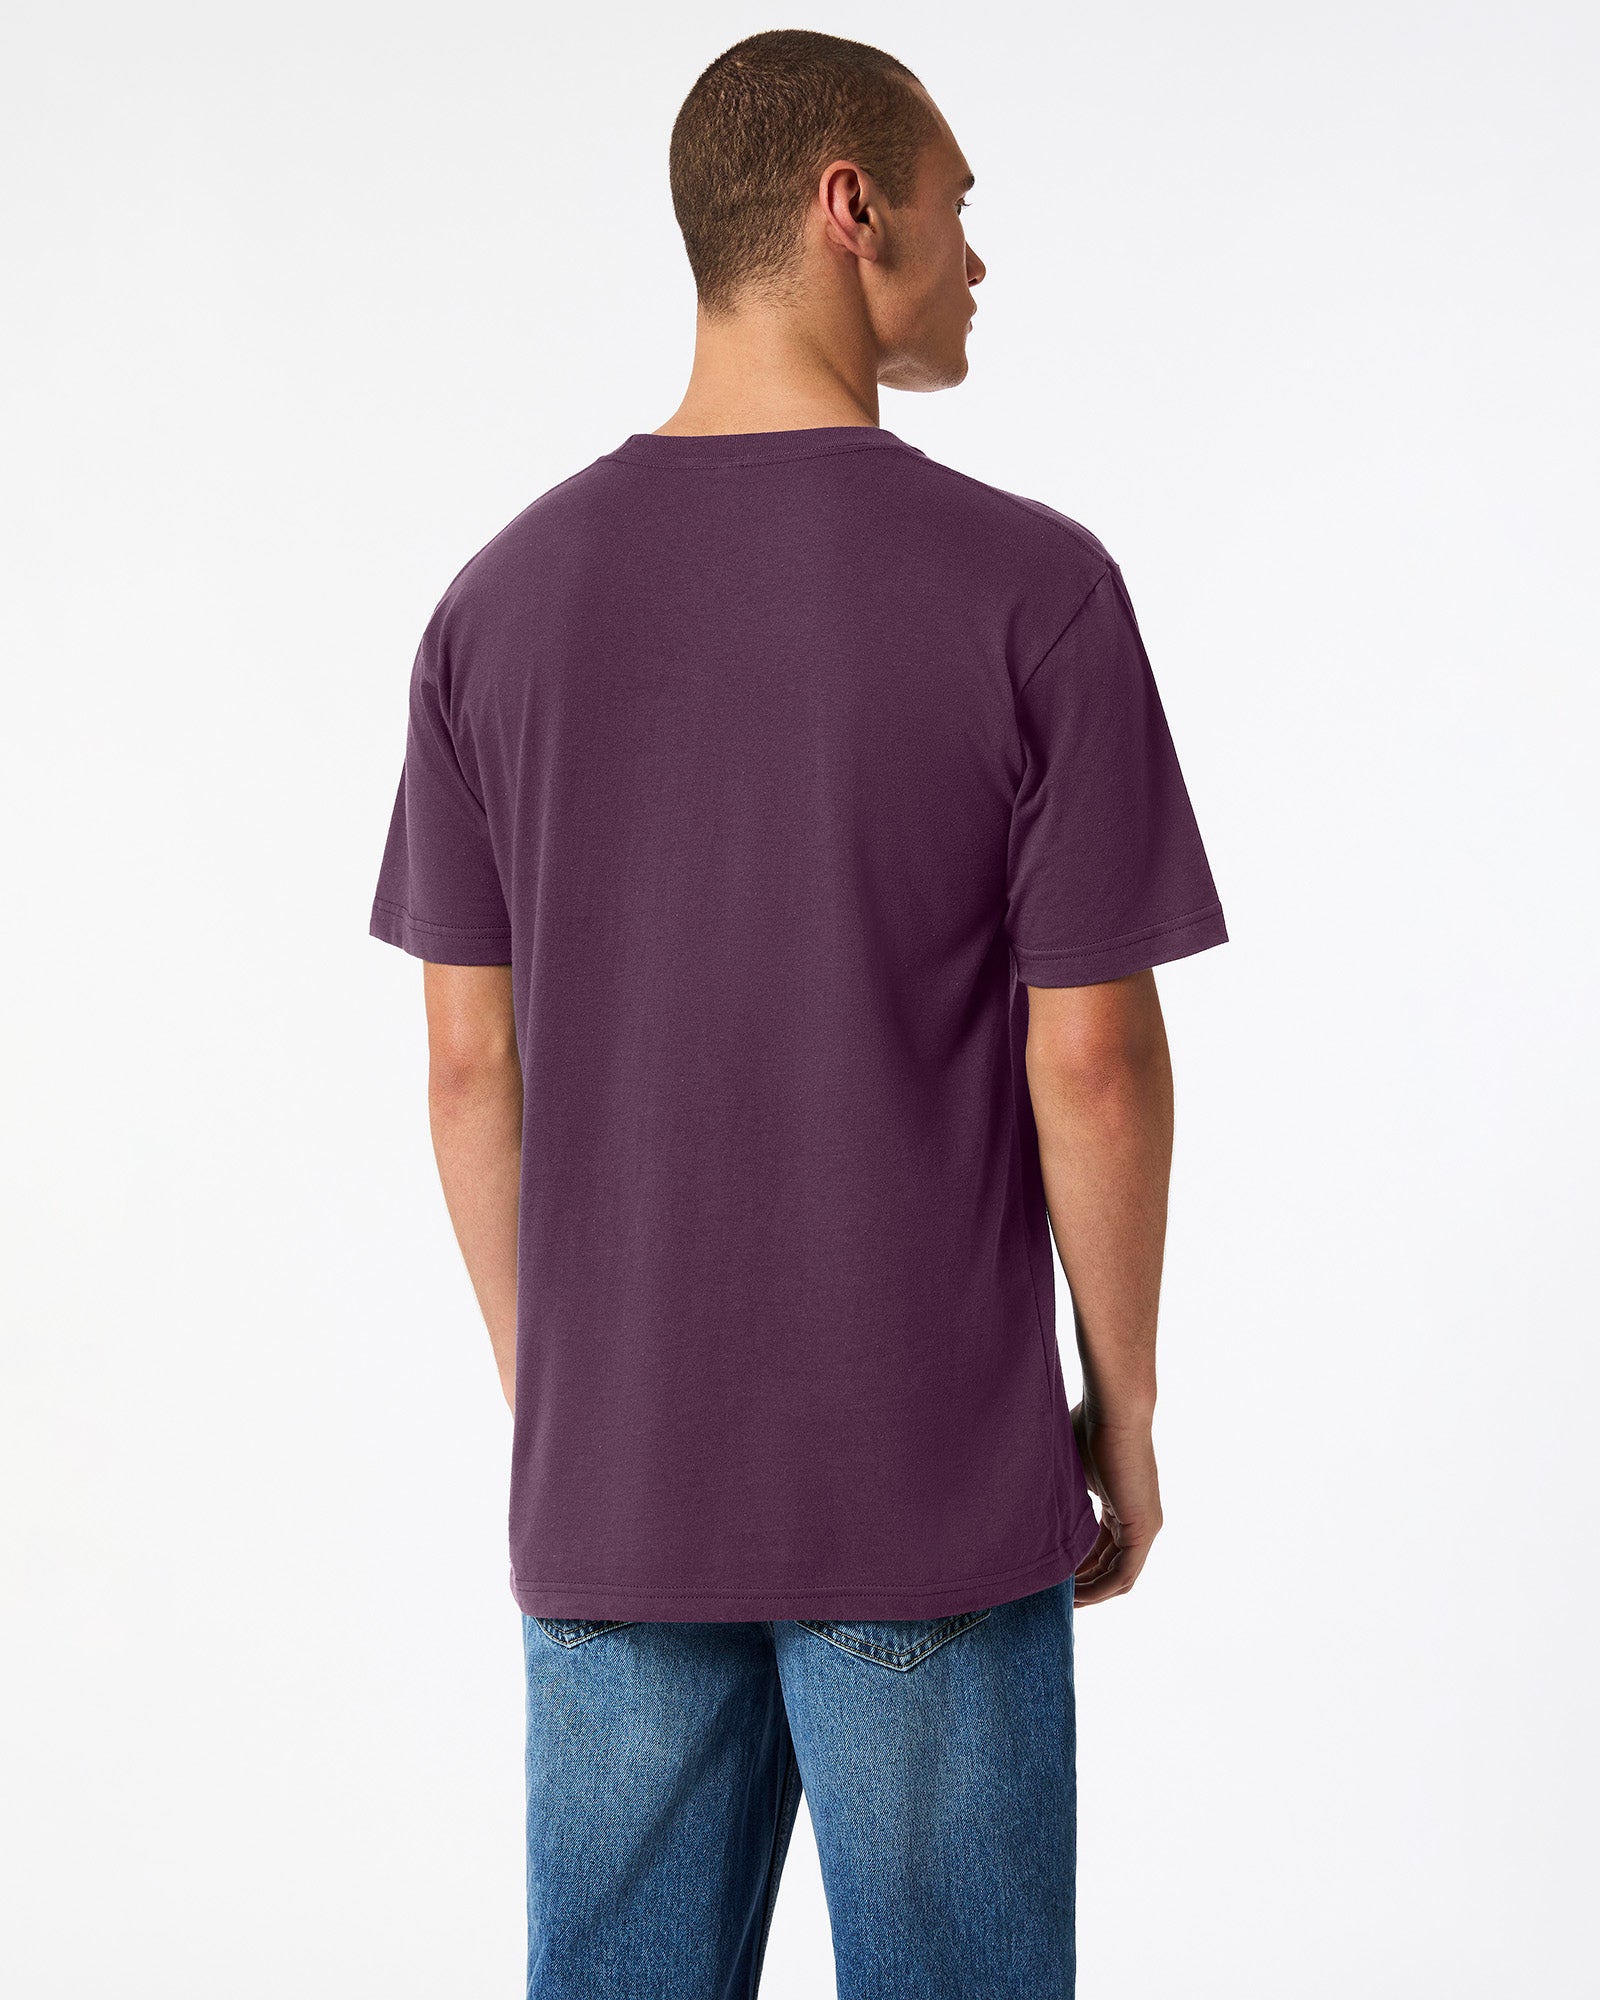 Fine Jersey Unisex Short Sleeve T-Shirt - Eggplant